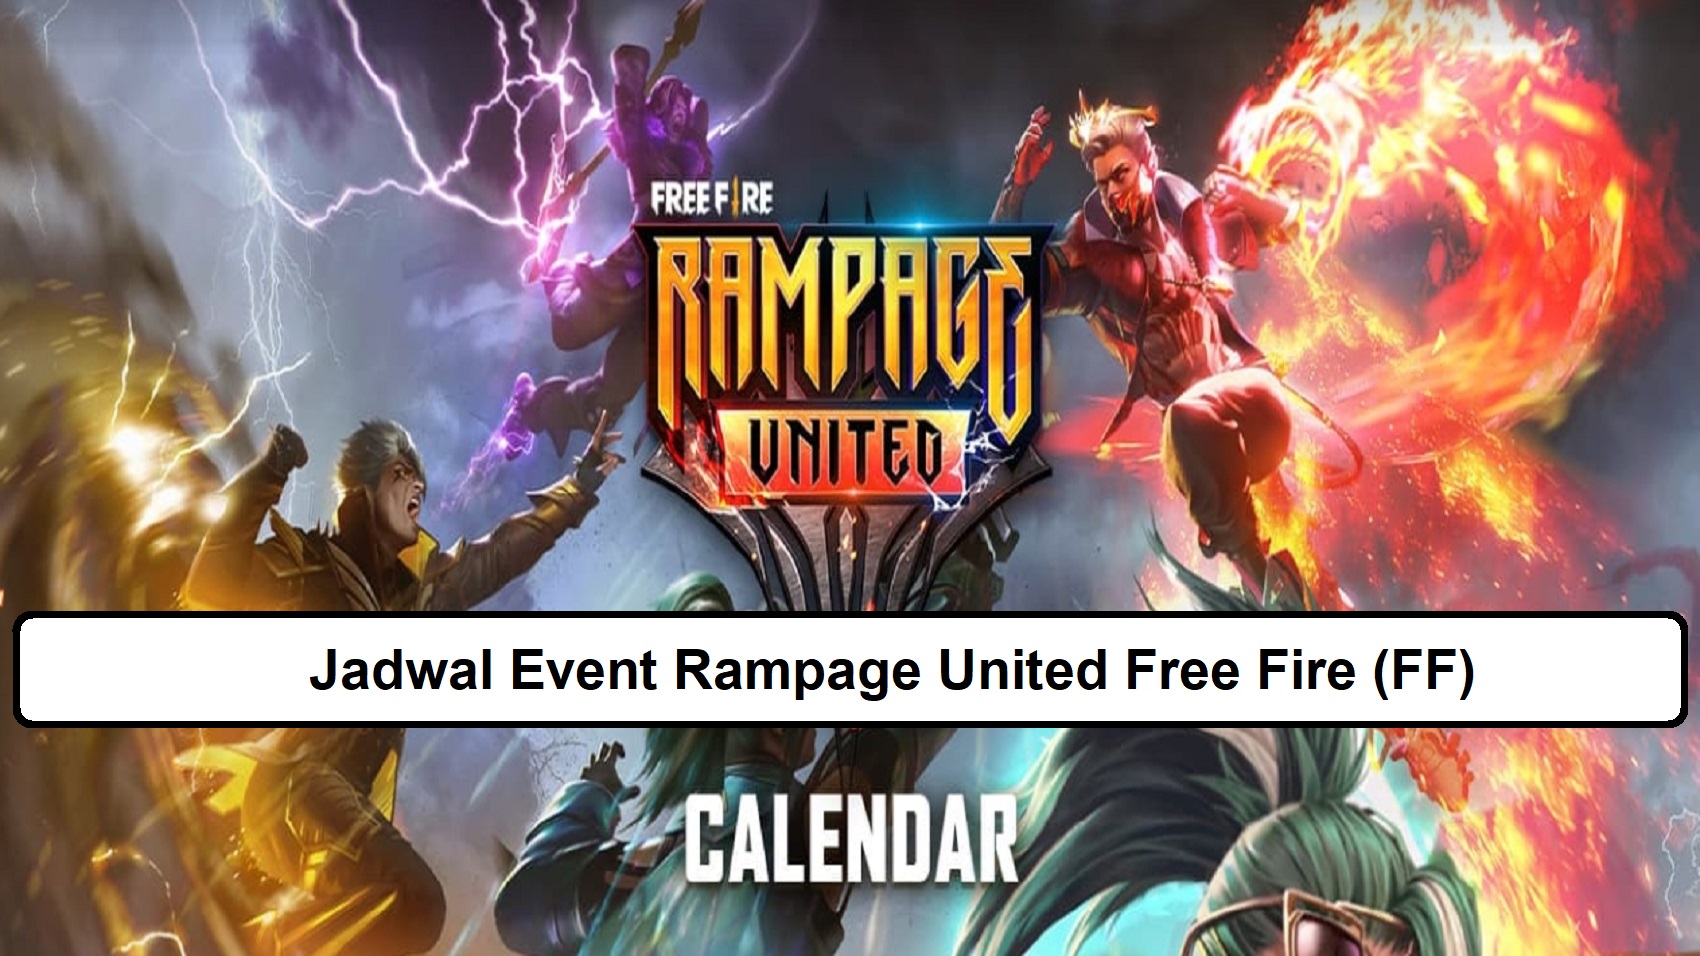 Jadwal Event Rampage United Free Fire (FF)